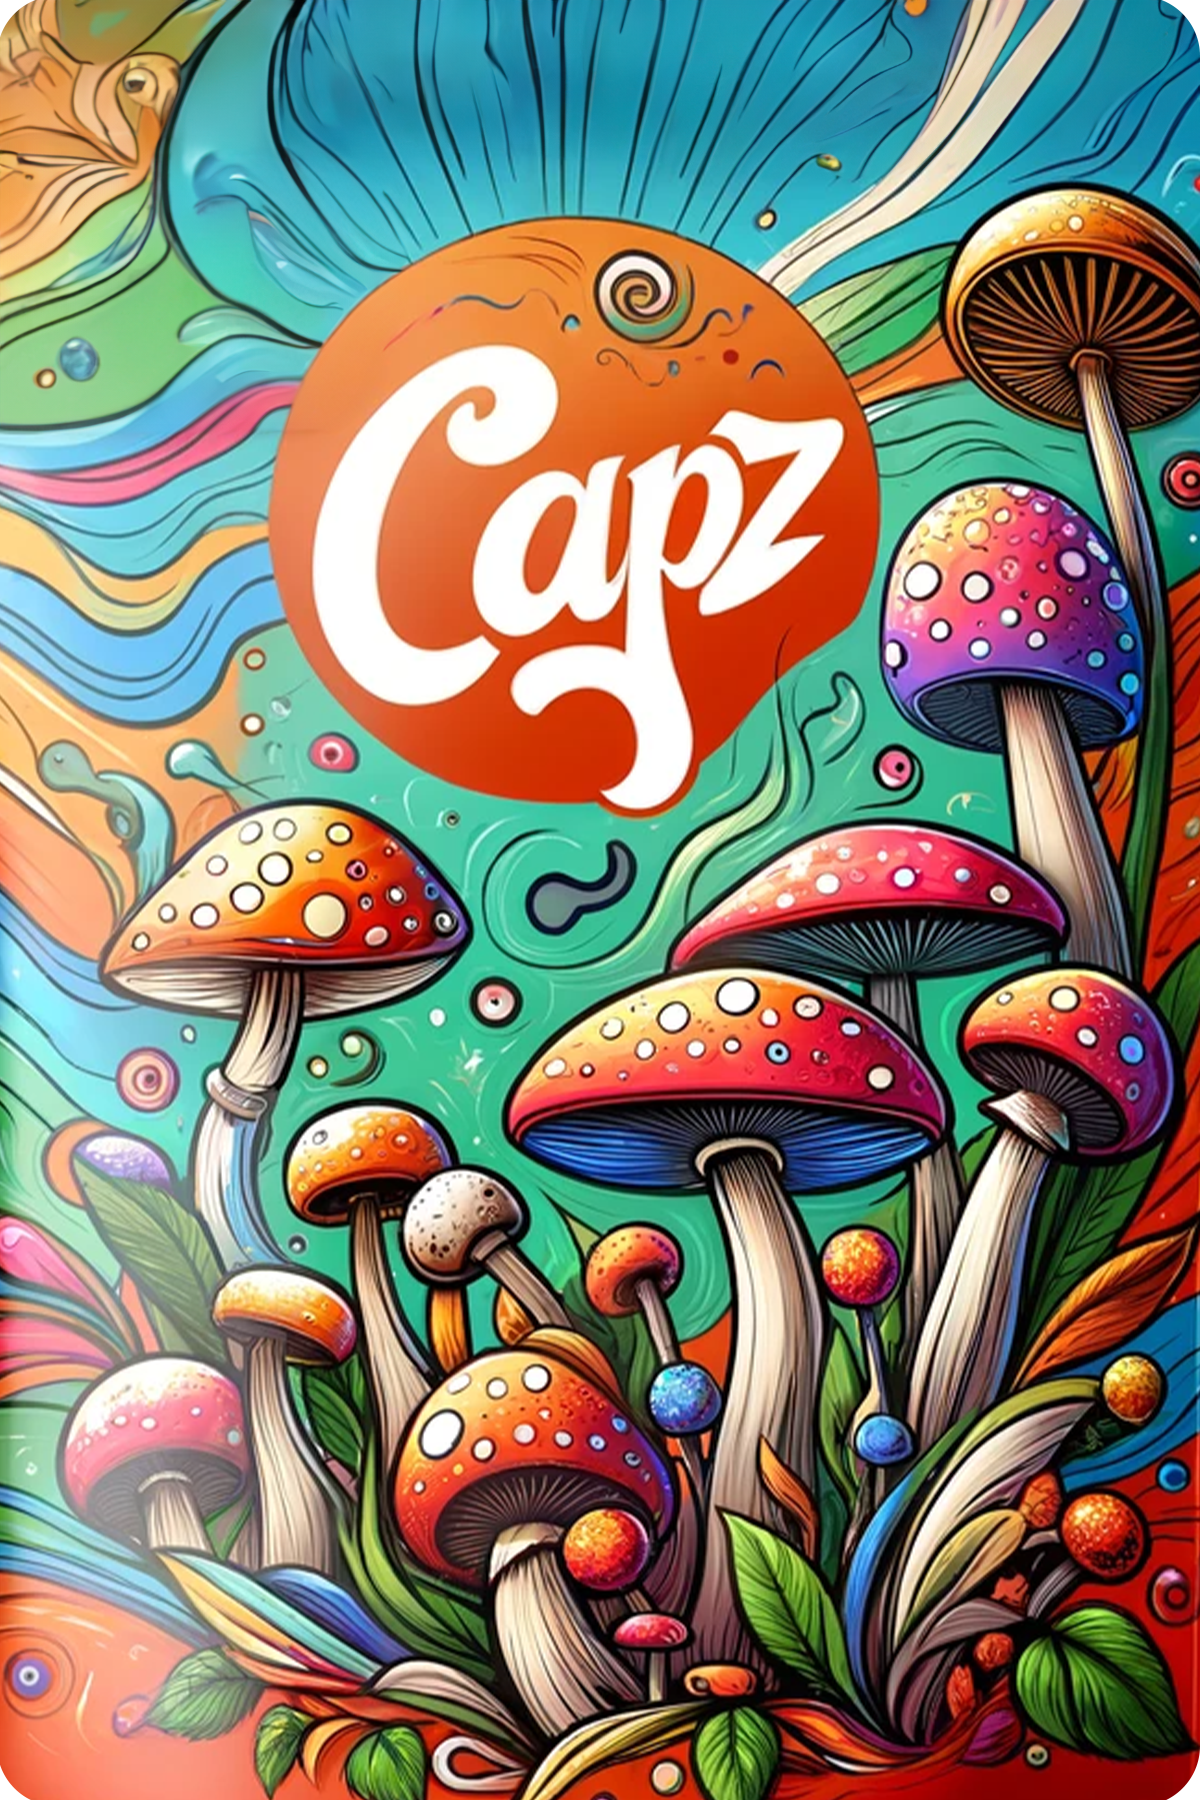 Capz Mushroom Mylar Sticker Bags